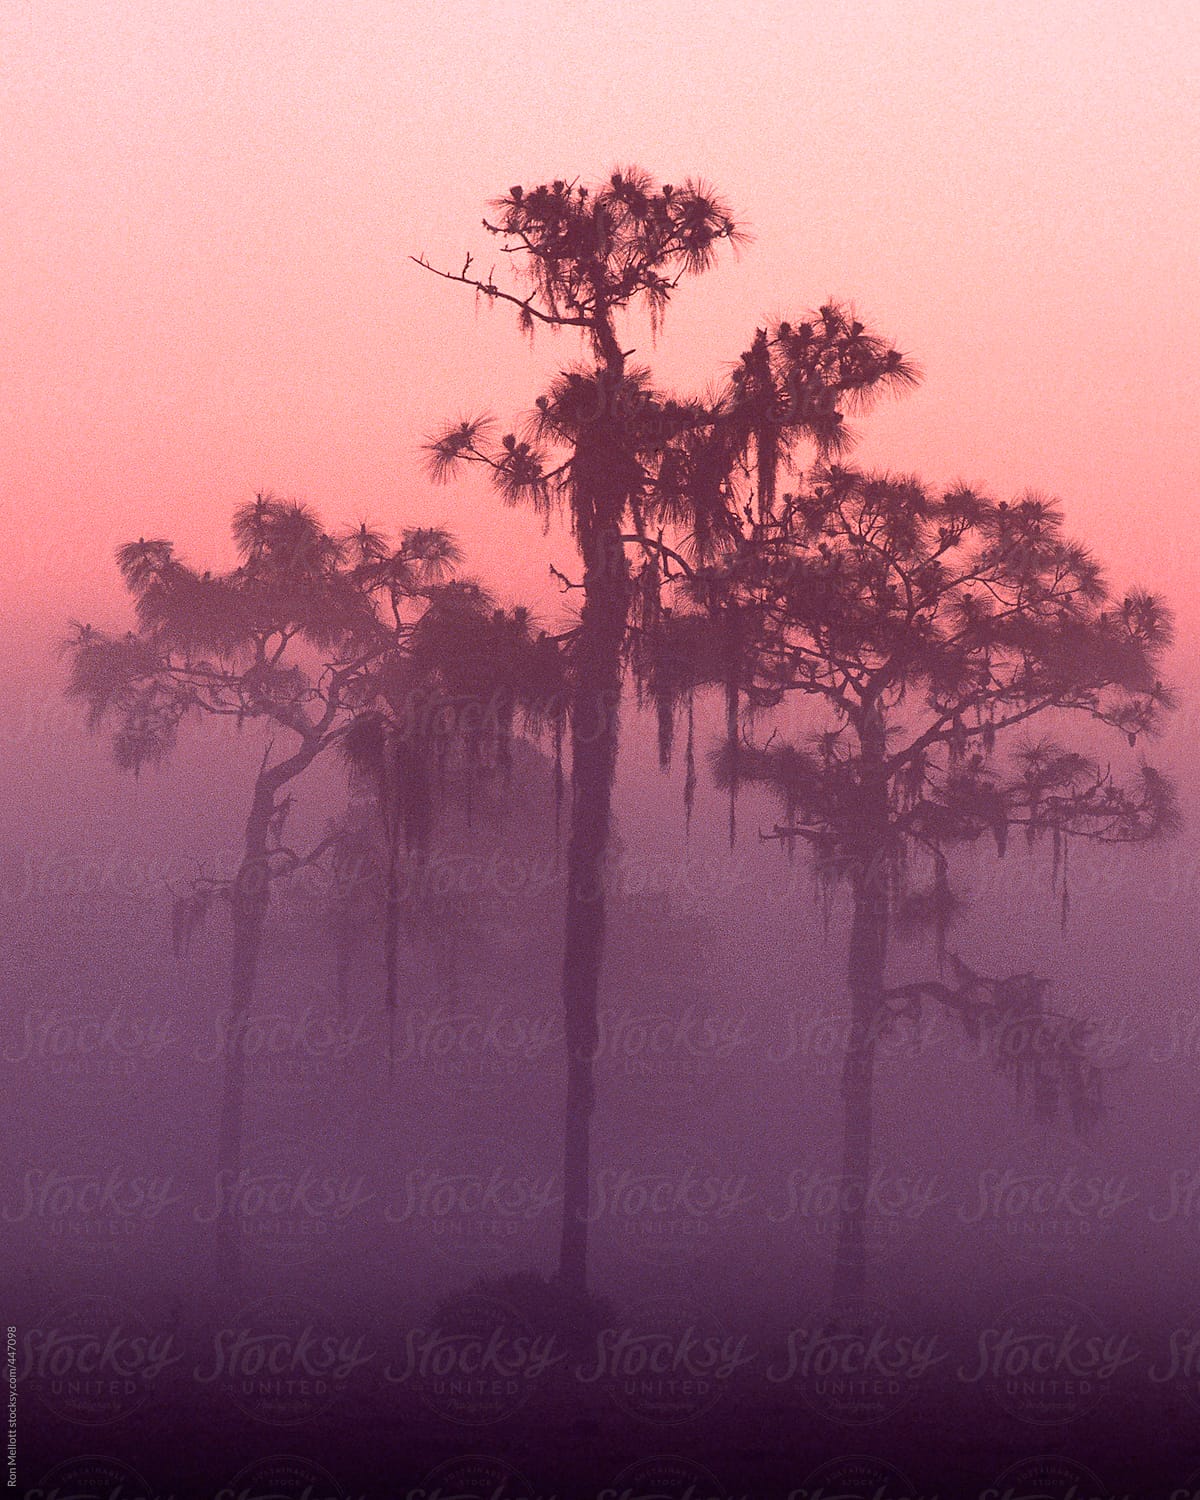 predawn colors through mist ground fog of longleaf pines (pinus palustris) and spanish moss